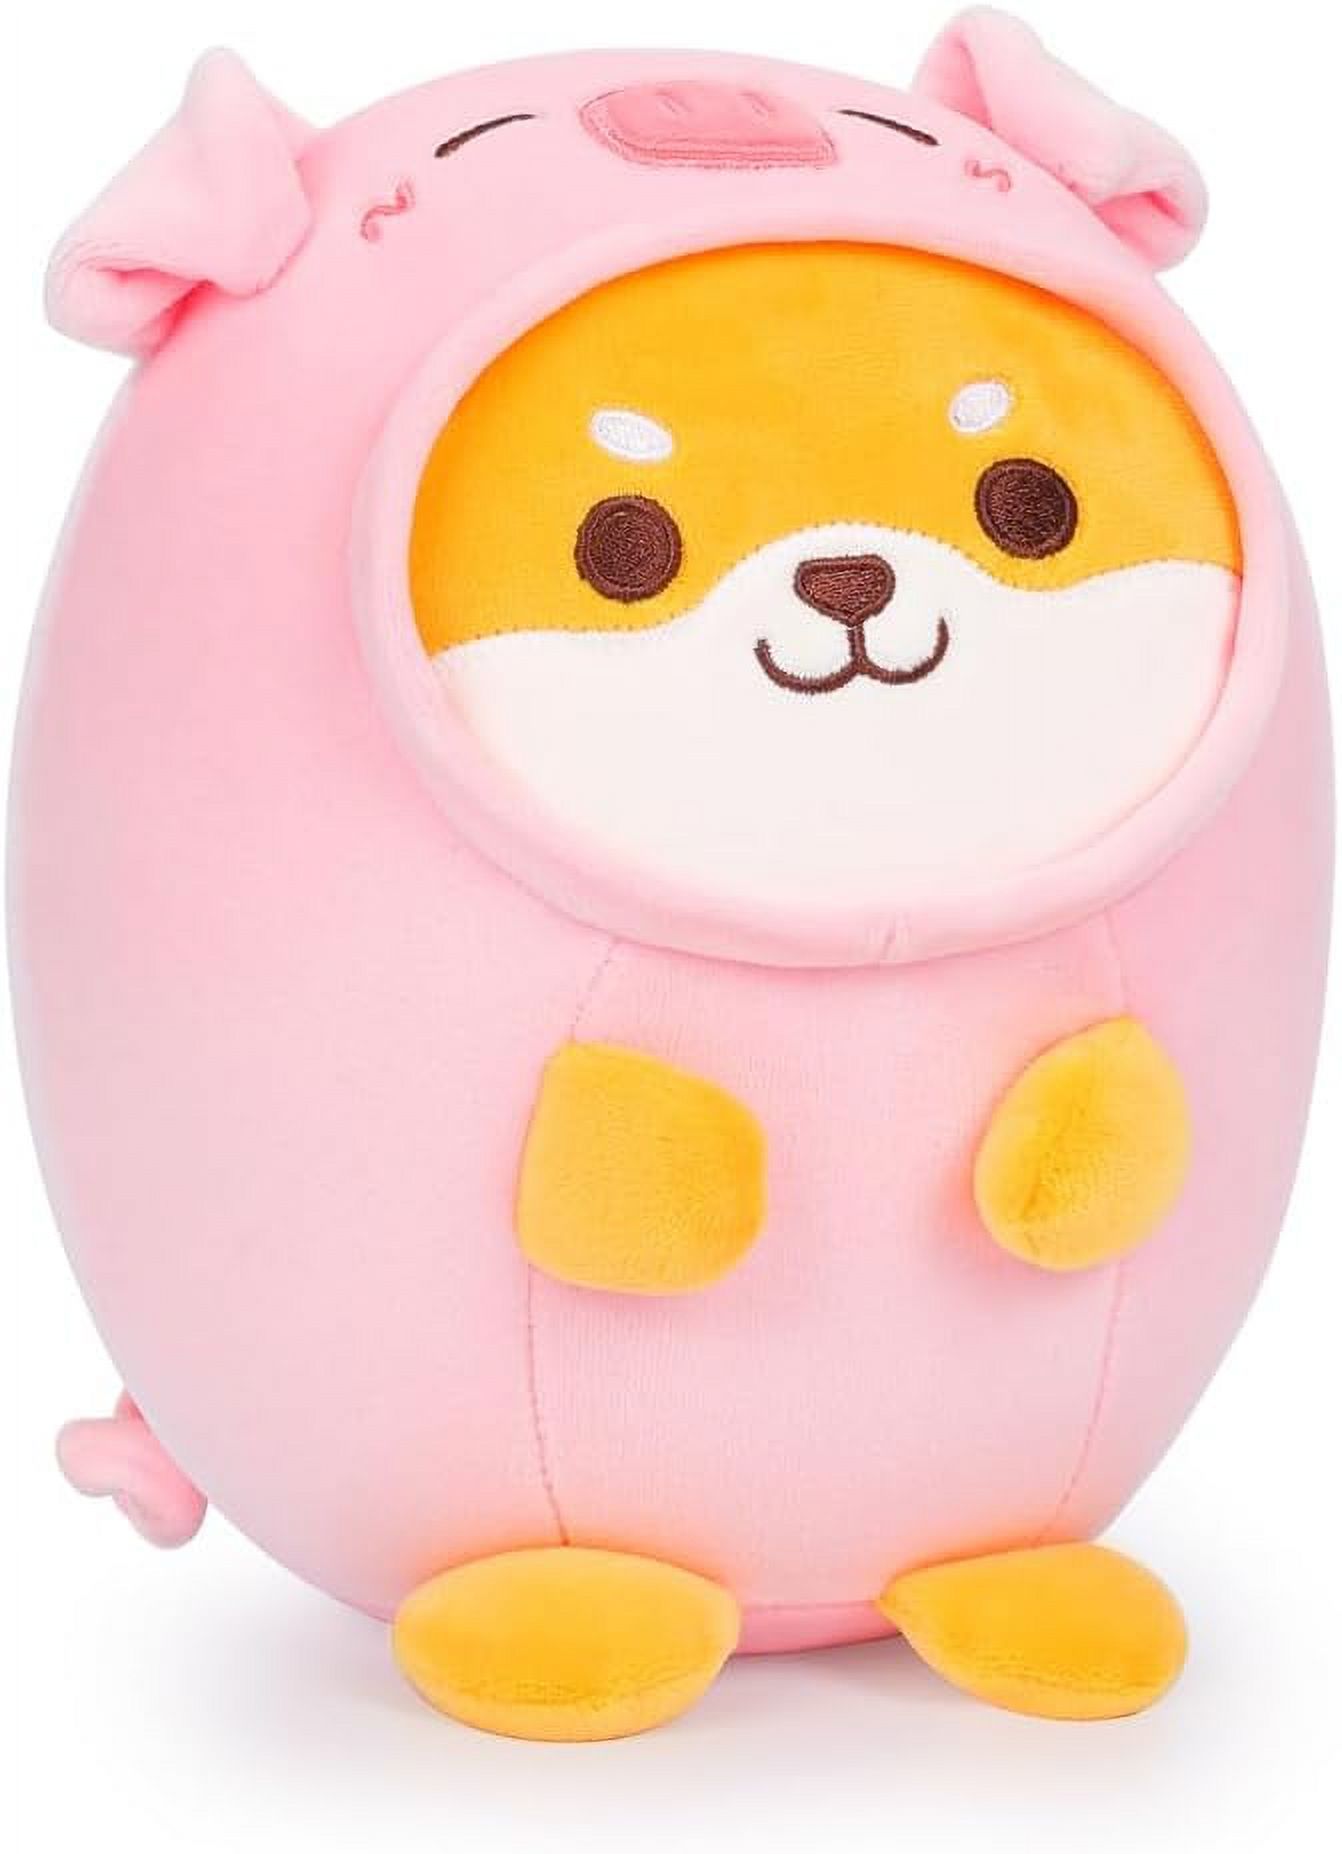 Piggy Corgi Akita Stuffed Animal Doll, 8 inch Cute Shiba Inu Pig Plush ...